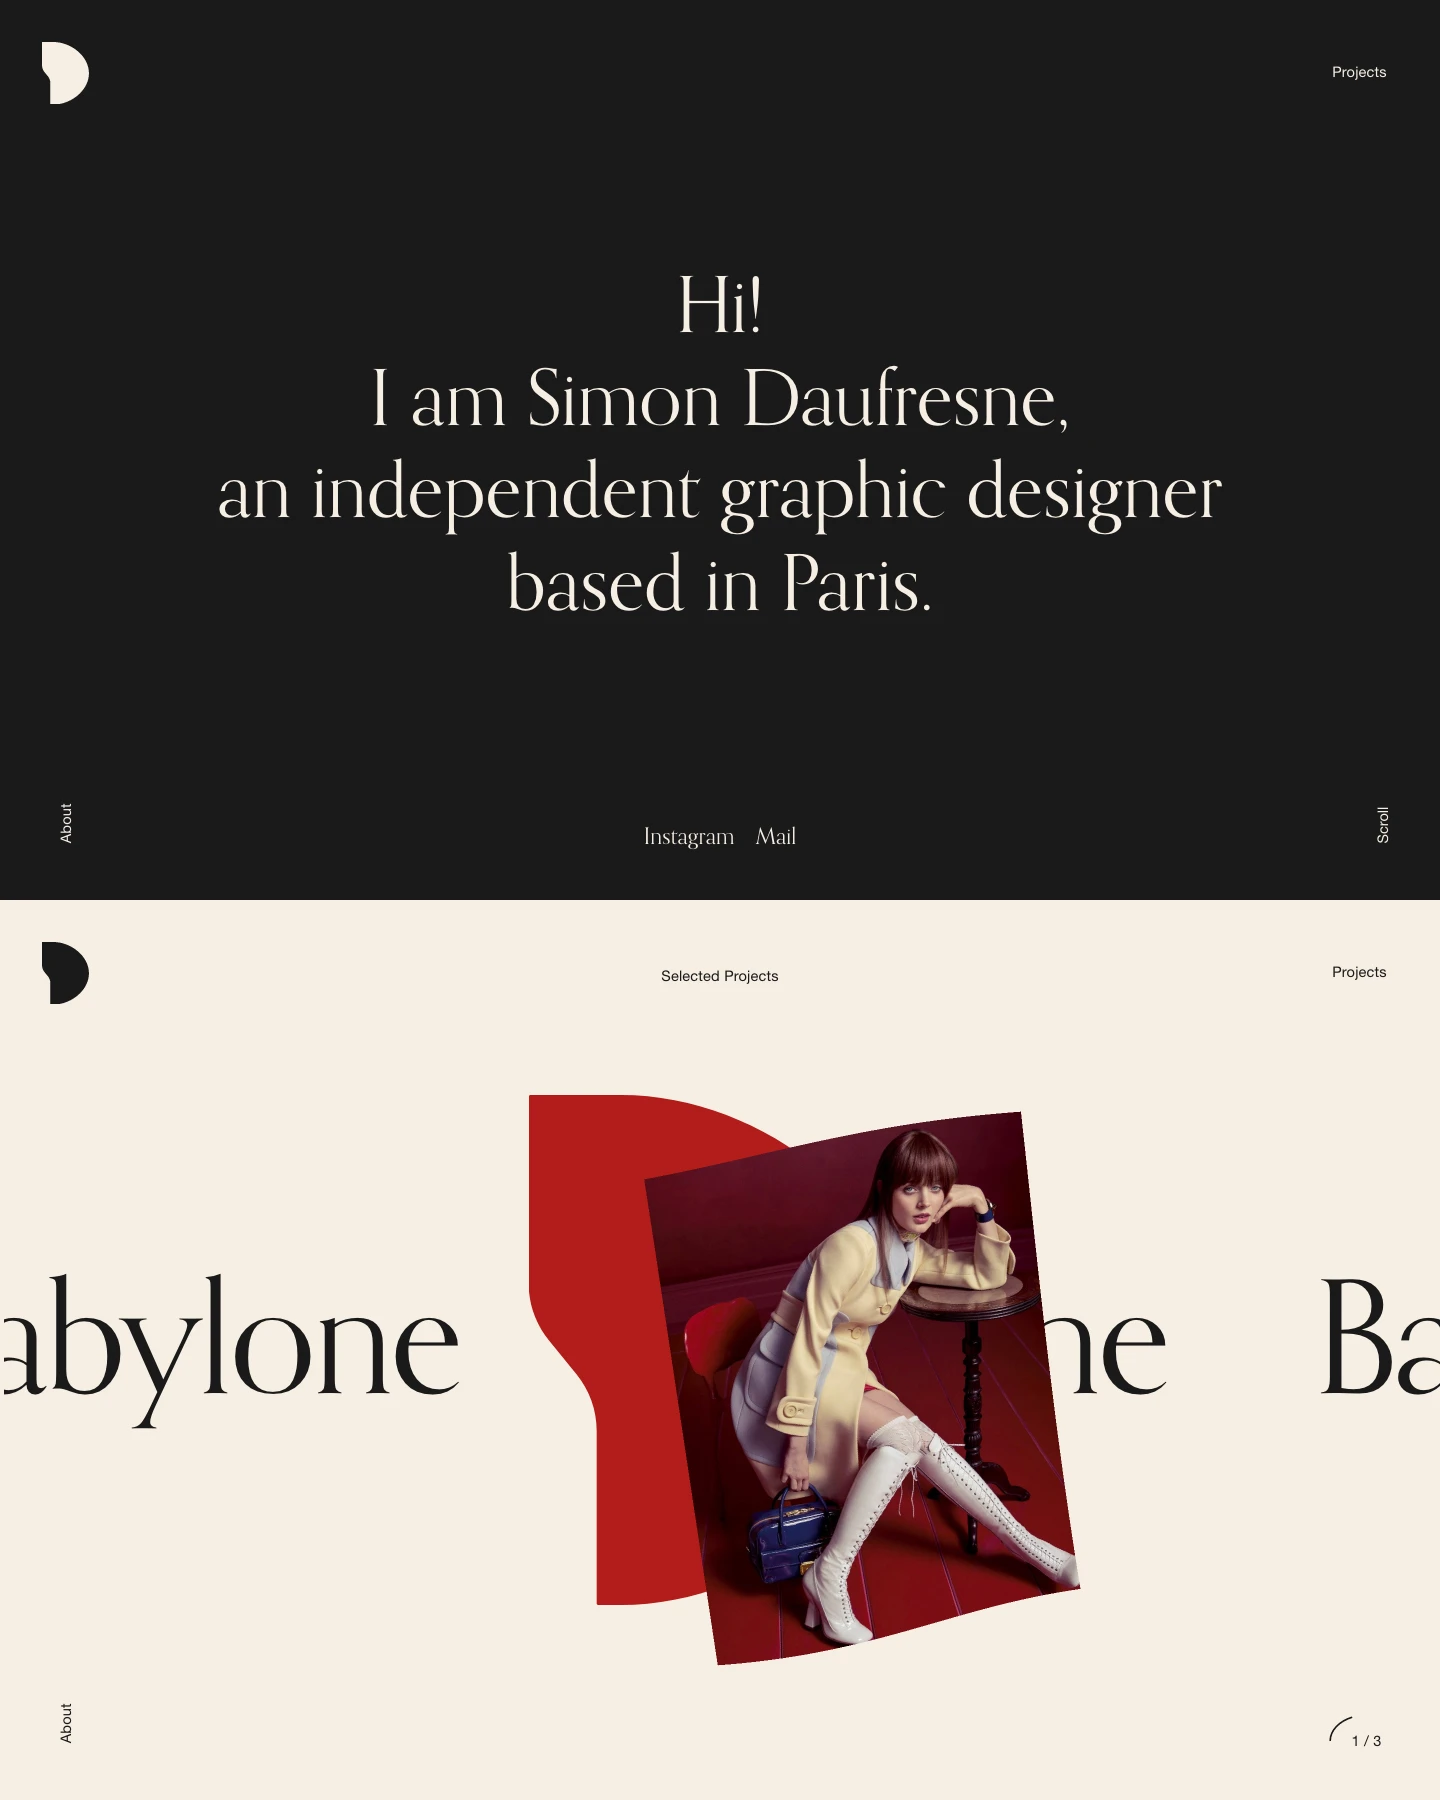 Simon Daufresne Landing Page Example: Hi! I am Simon Daufresne, an independent graphic designer based in Paris.